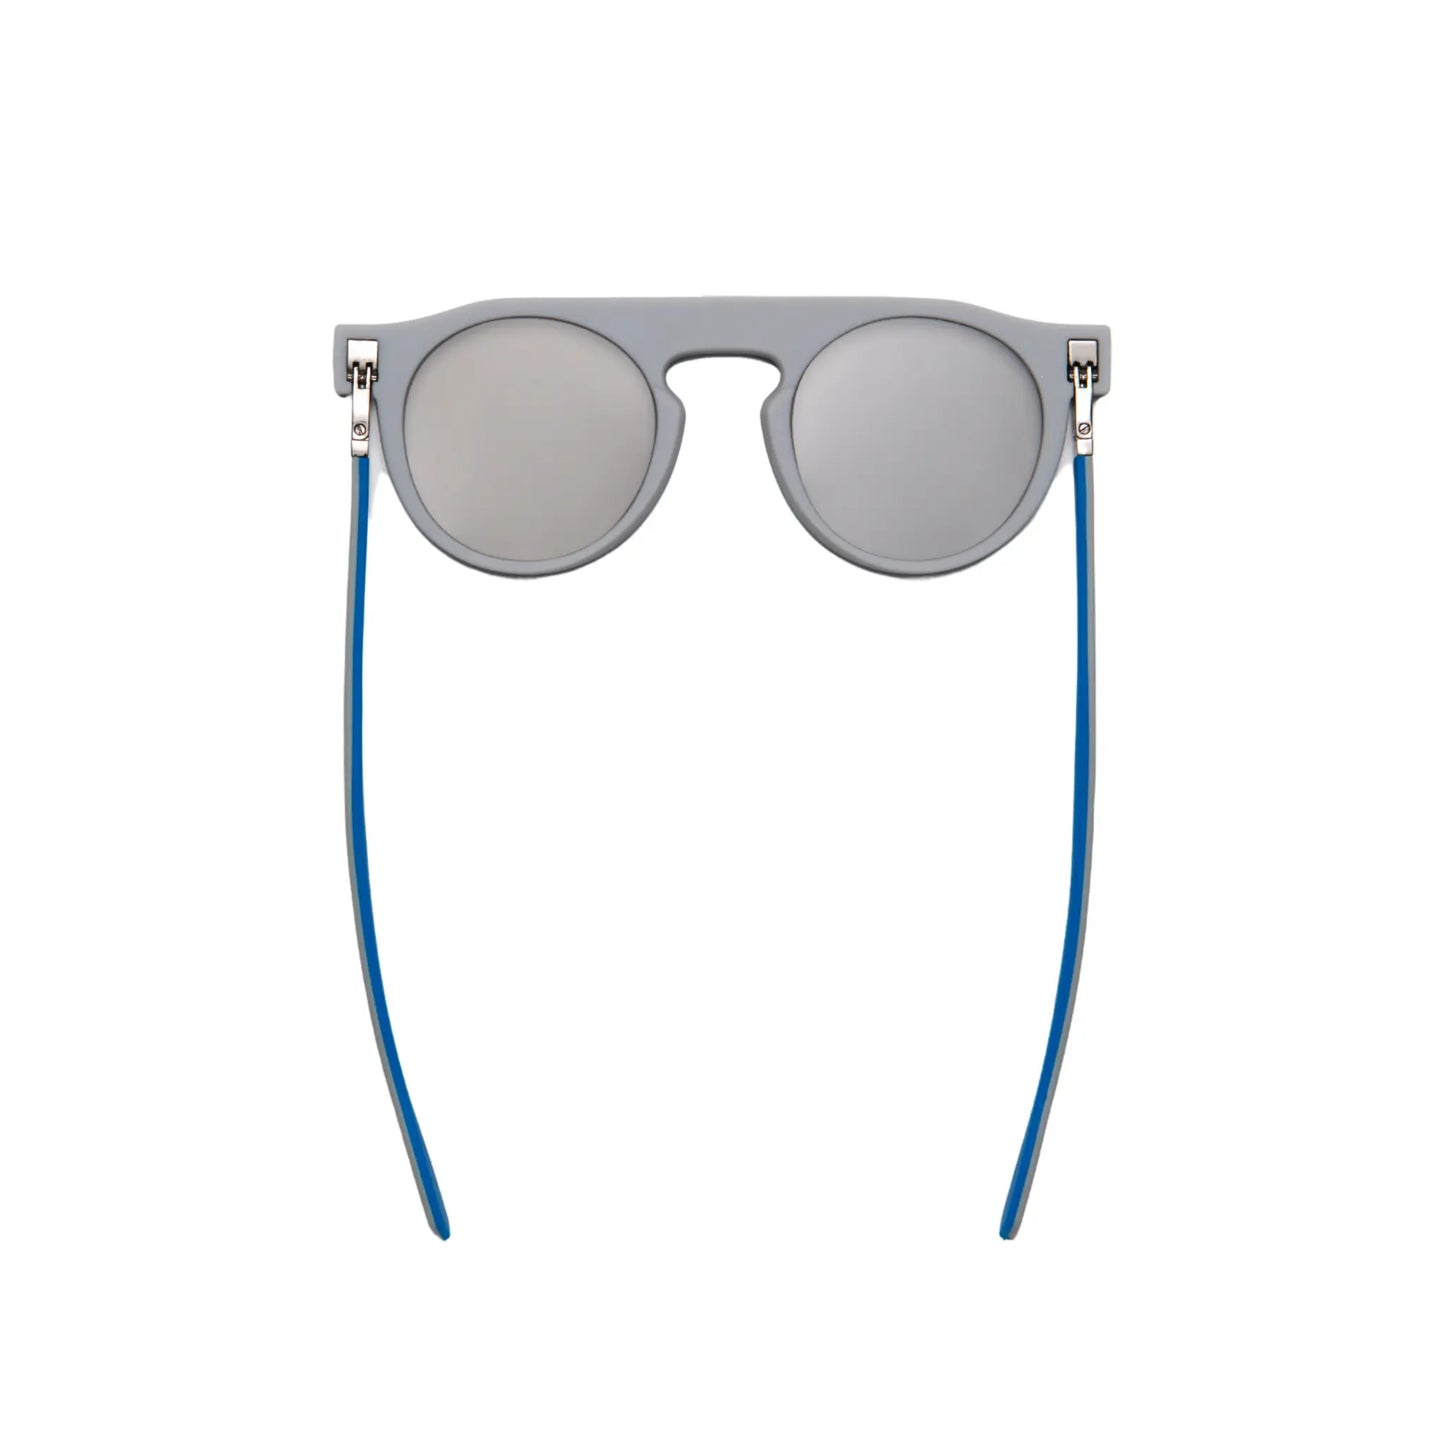 Reverso sunglasses black/grey & blue reversible & ultra light top view